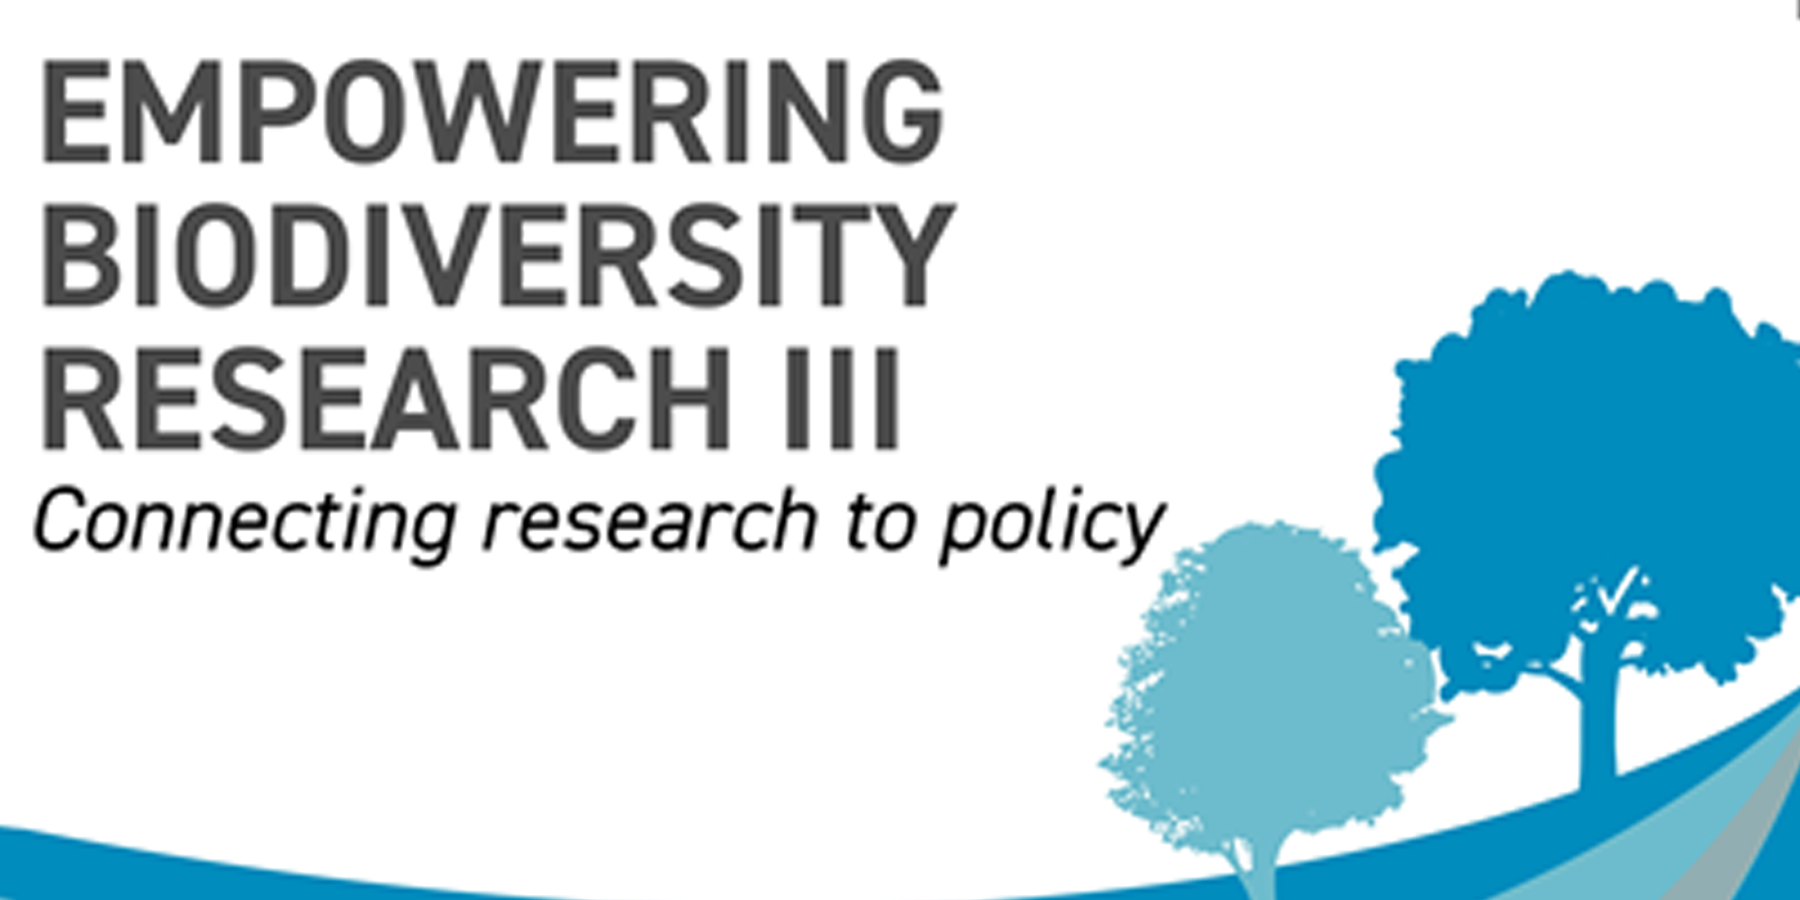 Empowering Biodiversity Research III